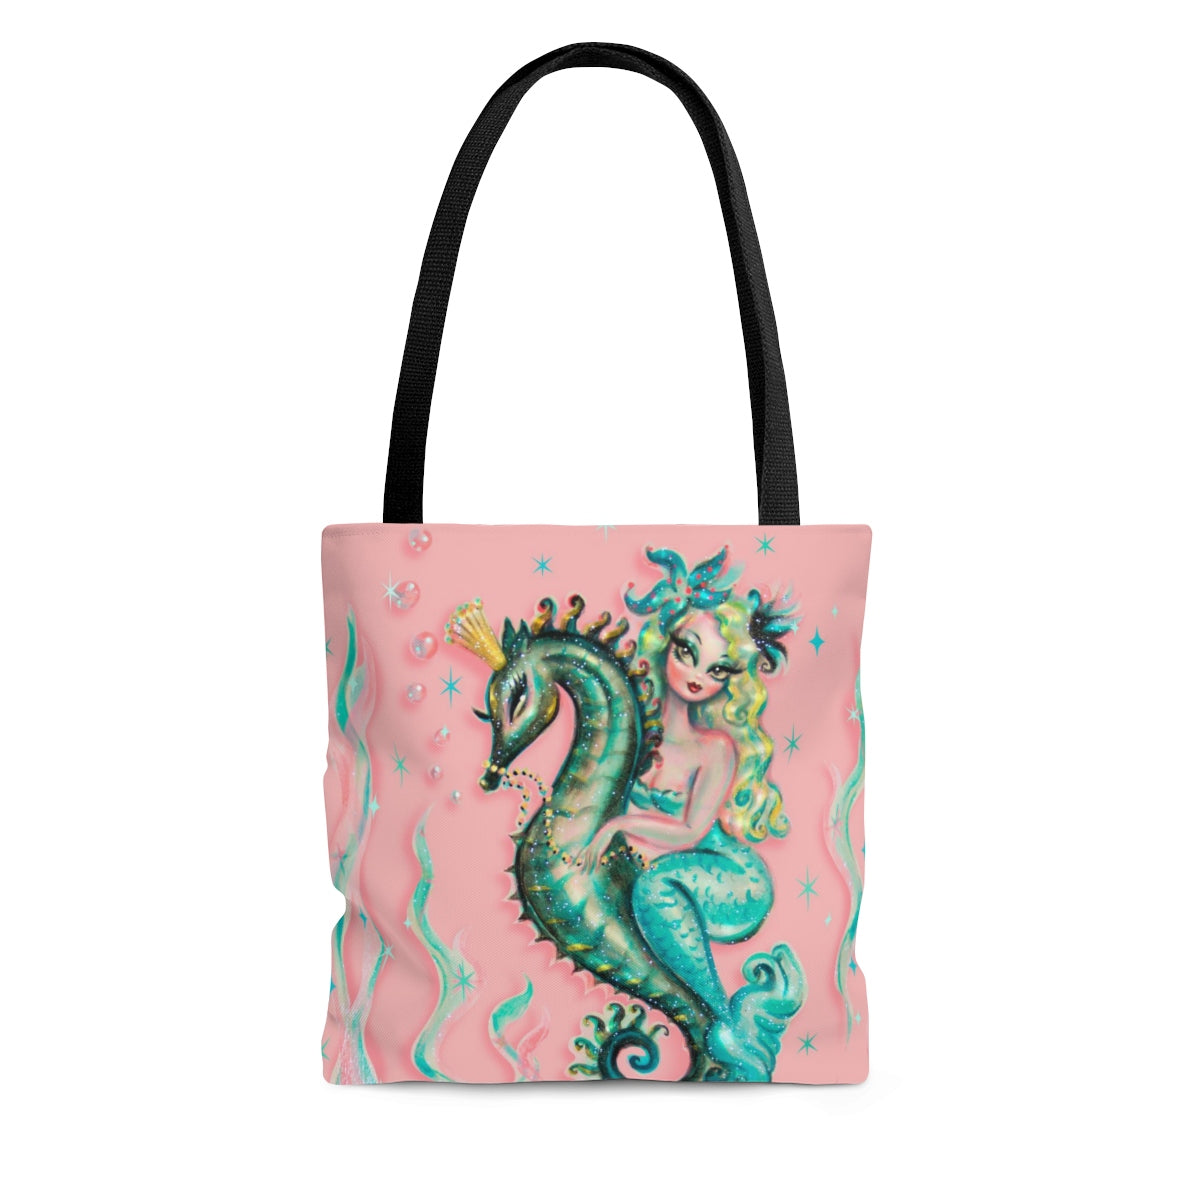 Blue Mermaid Riding a Seahorse Prince • Tote Bag